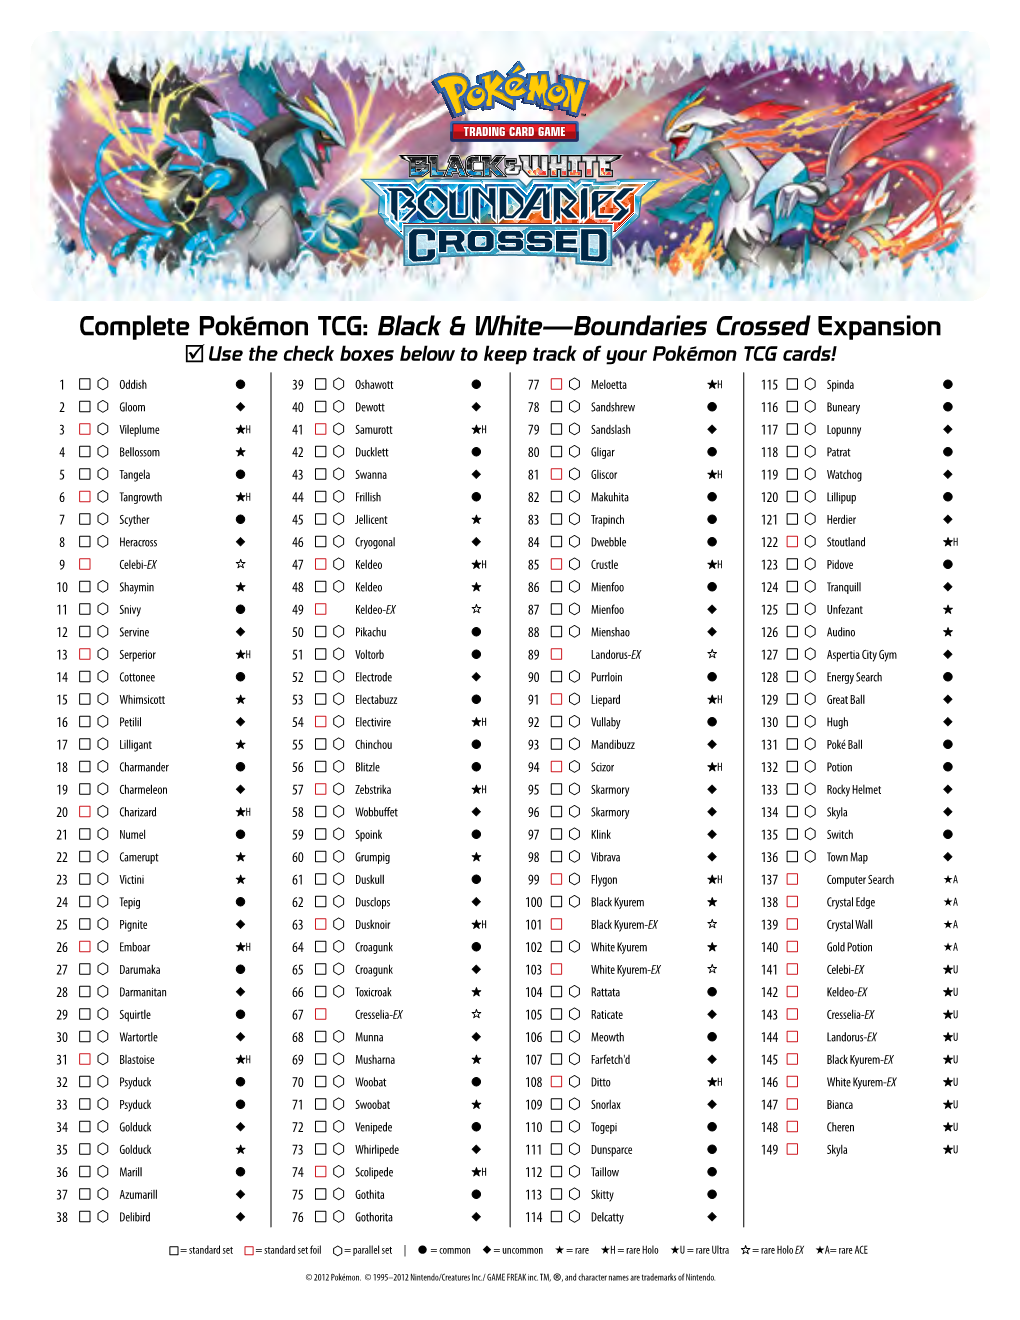 Complete Pokémon TCG: Black & White—Boundaries Crossed